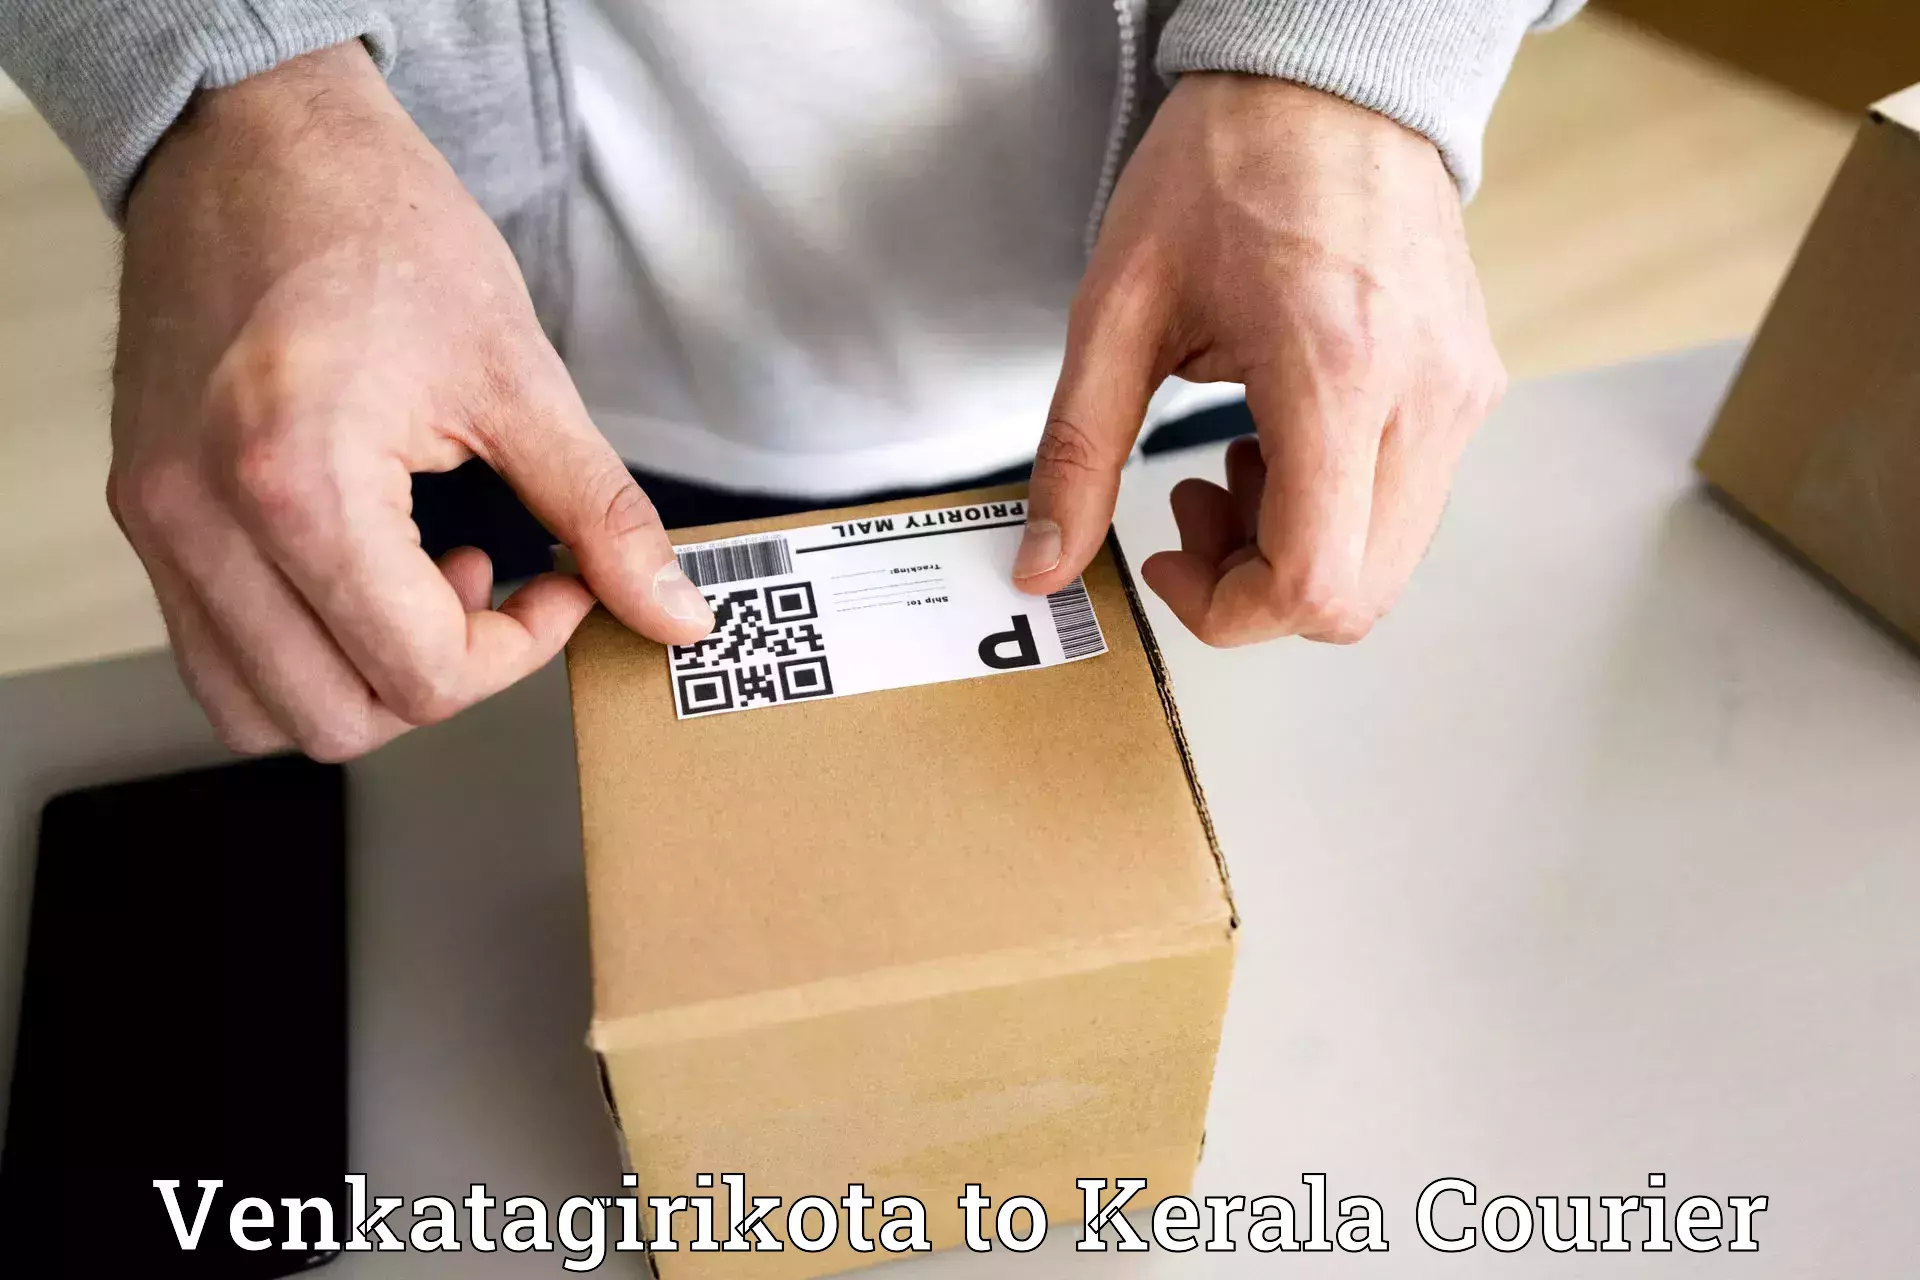 Express delivery capabilities Venkatagirikota to Parappa